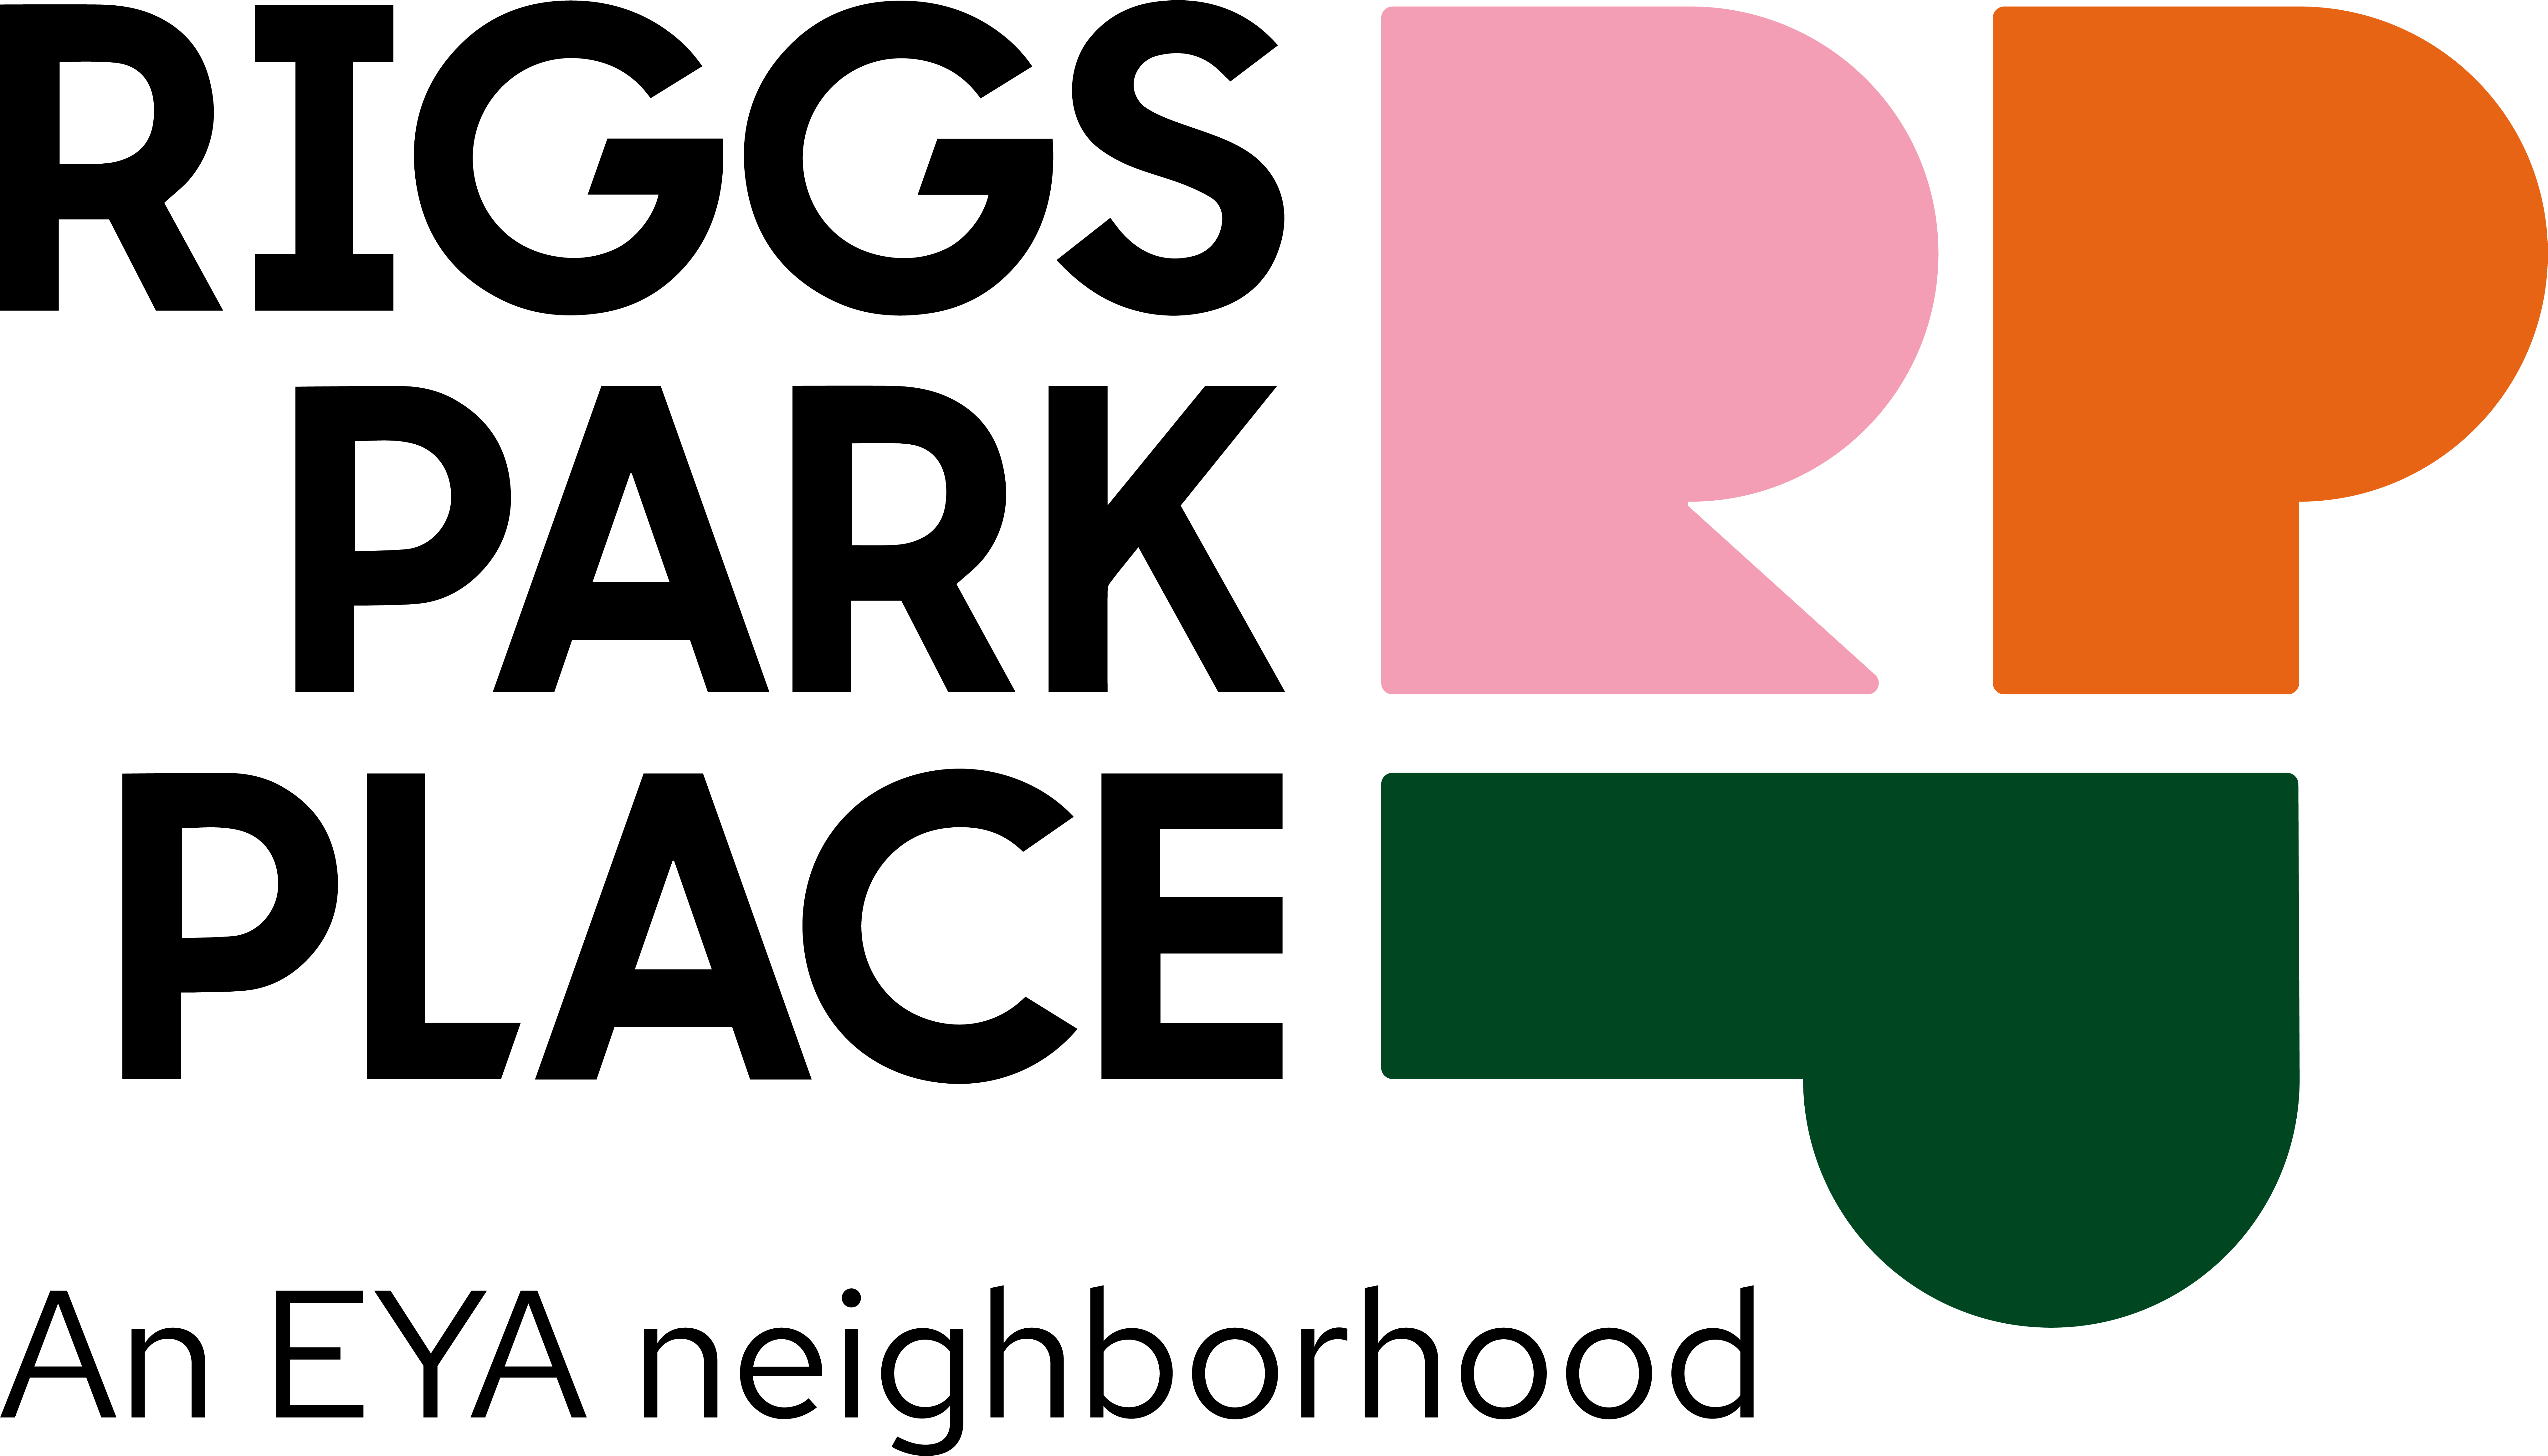 Riggs Park Place